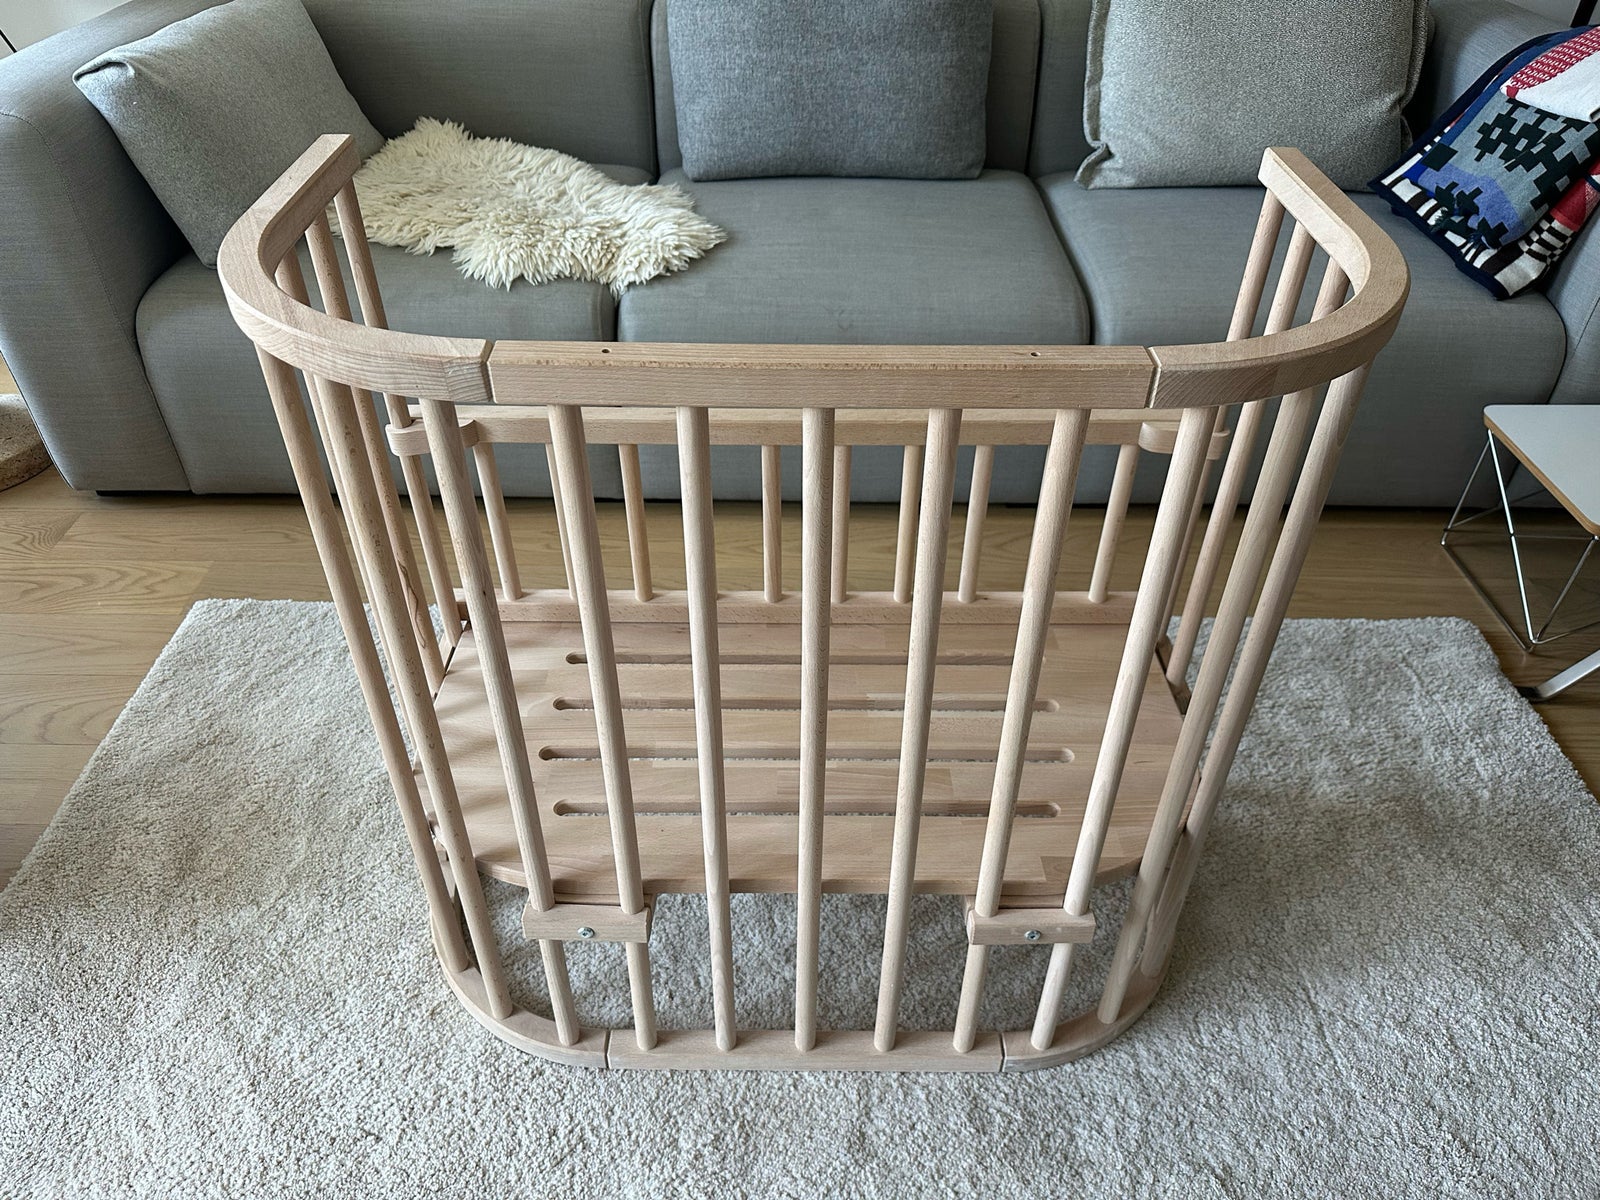 Babyseng, Babybay Bedside Crib